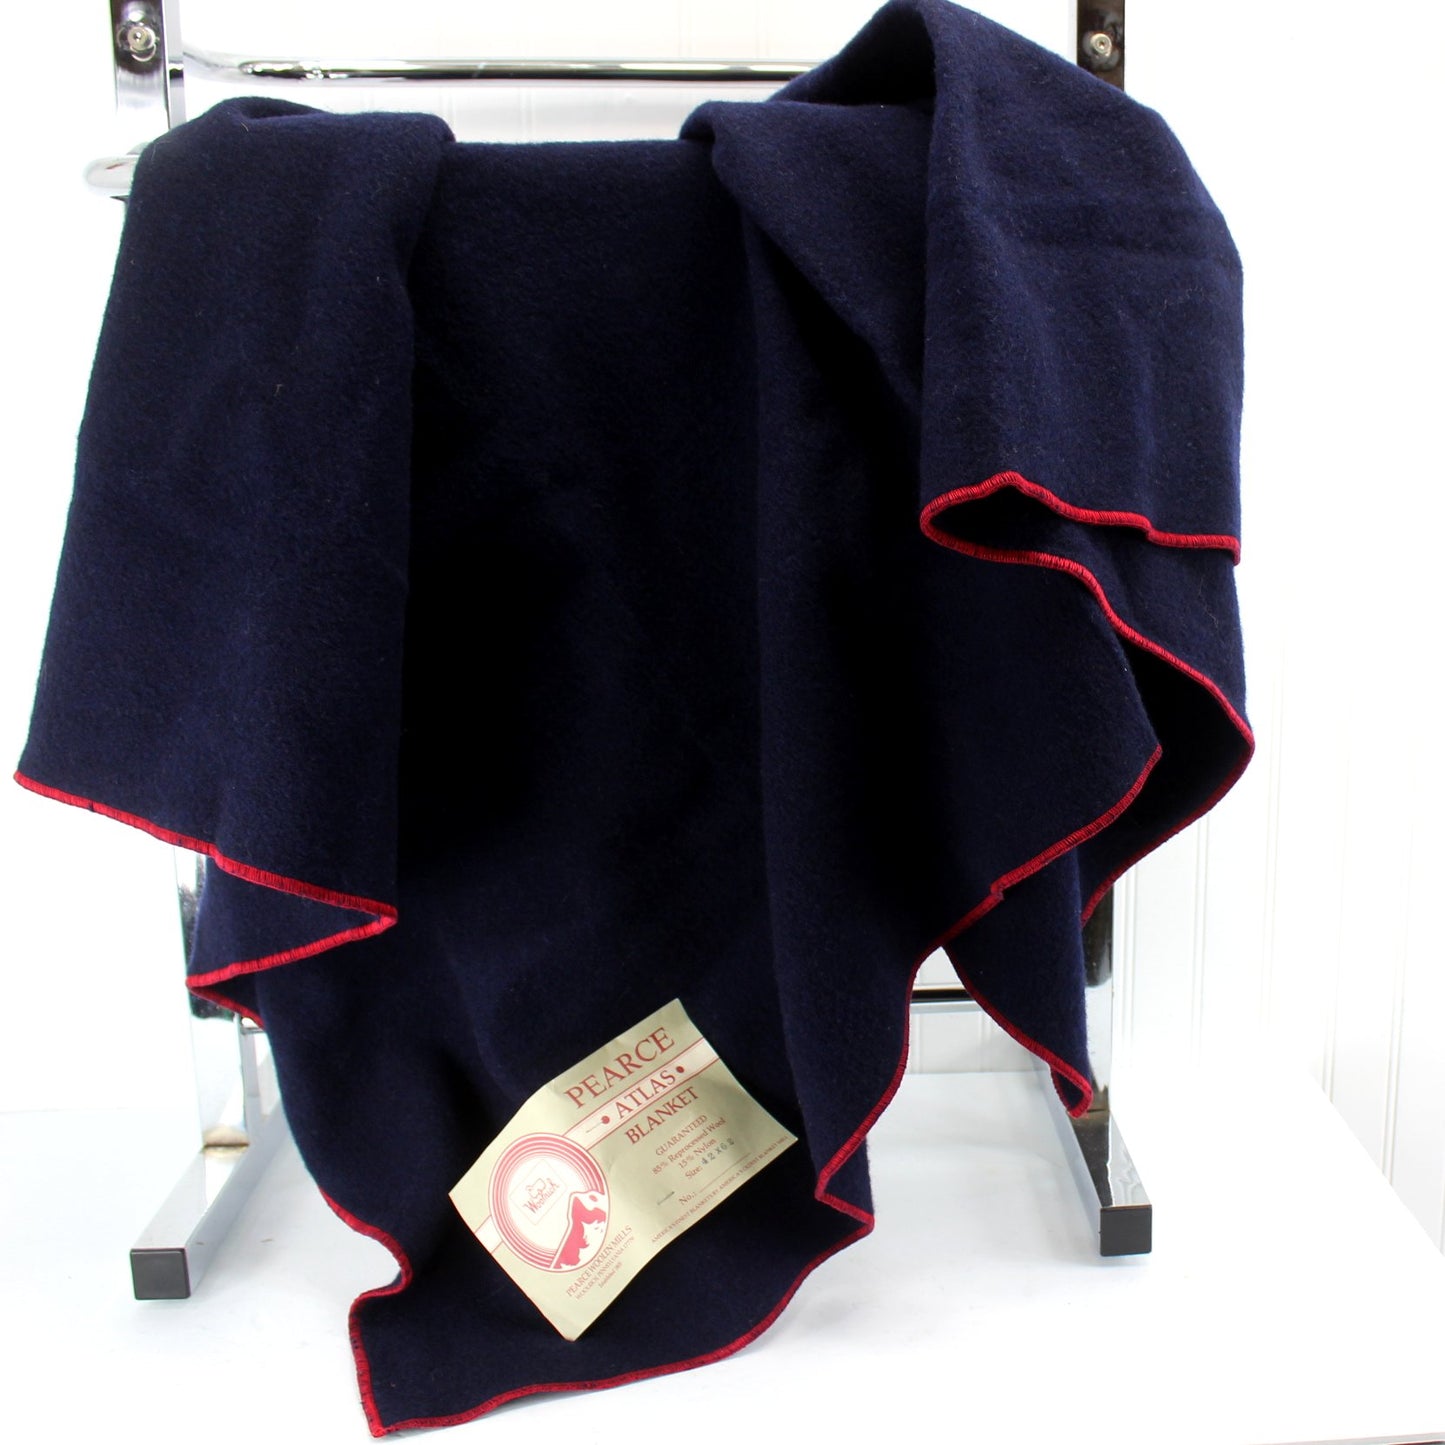 Woolrich Wool Blend Blanket Throw Navy Red Stitch New 40" x 60" sofa throw travel blanket